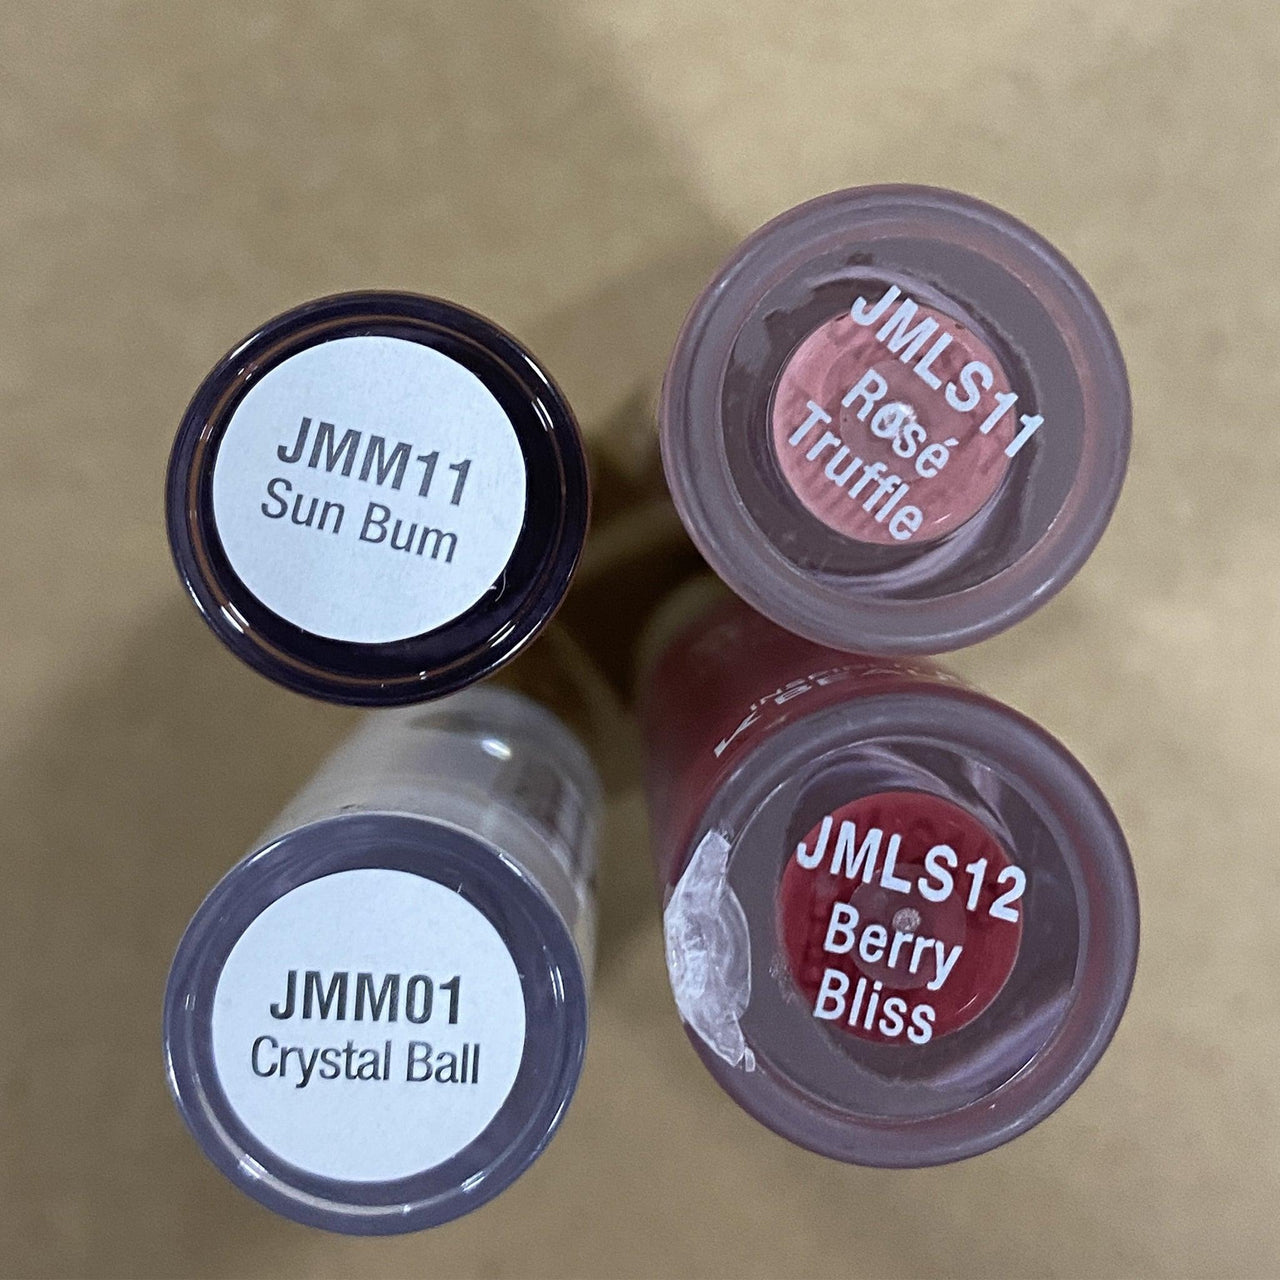 Joah Lipsticks And Glosses (50 Pcs Box) - Discount Wholesalers Inc